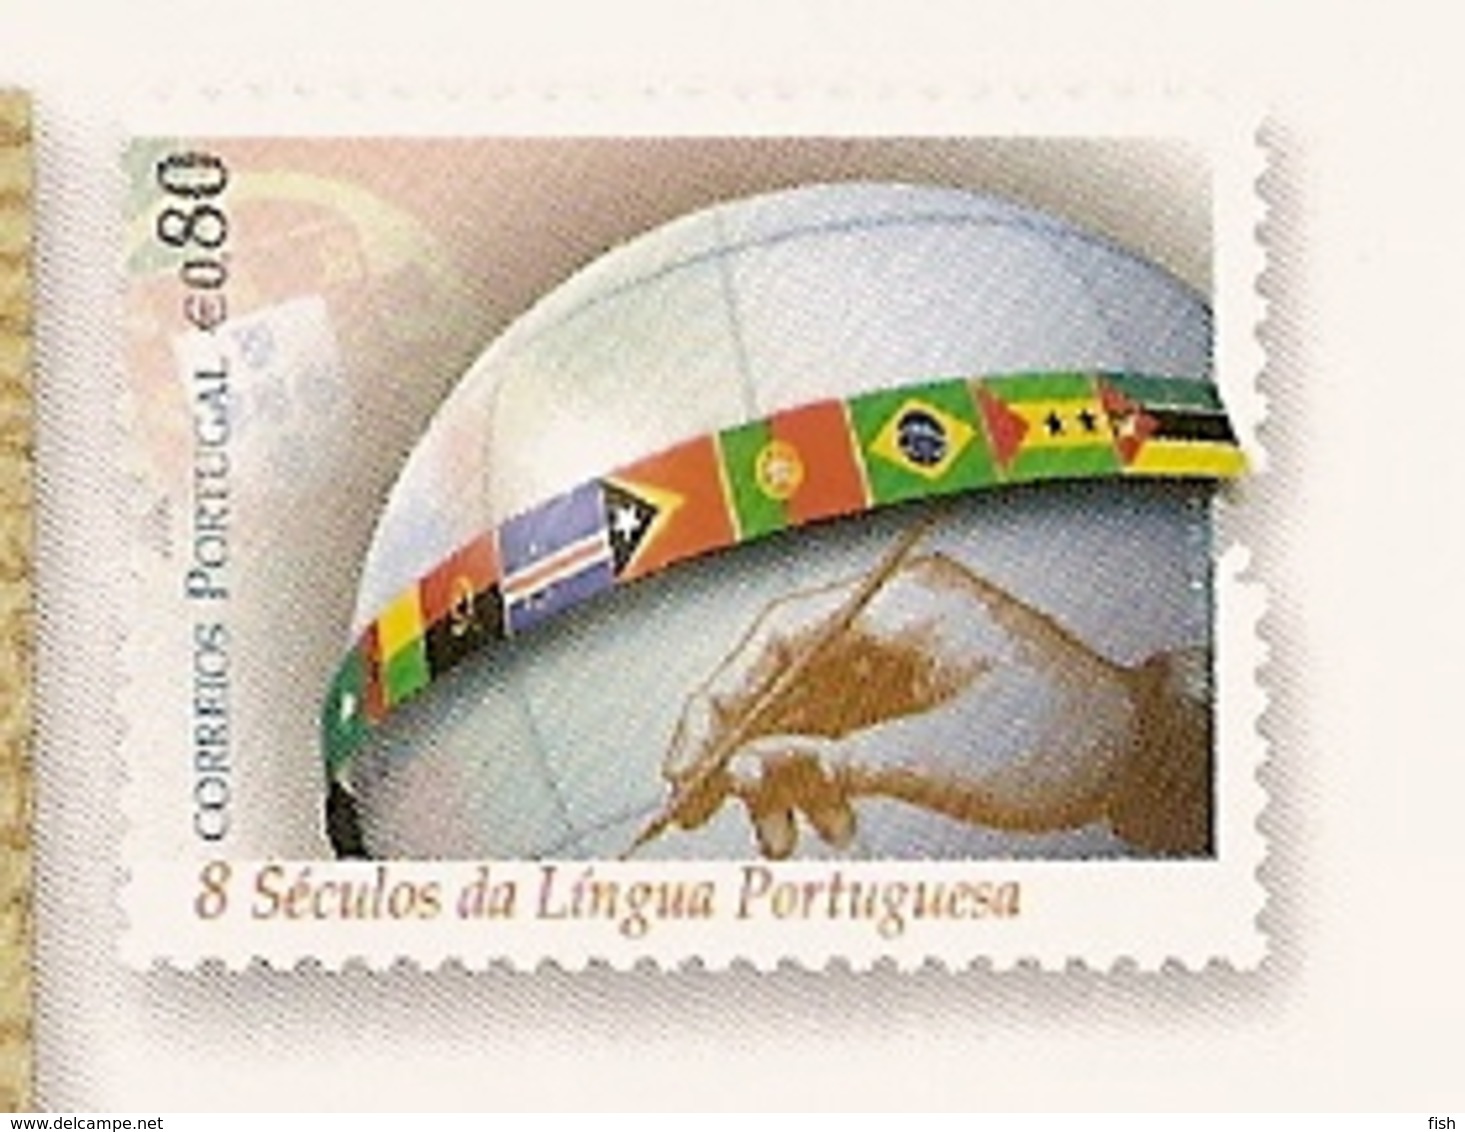 Portugal ** & VIII Centuries Of Portuguese Language 2014 (3222) - Stamps